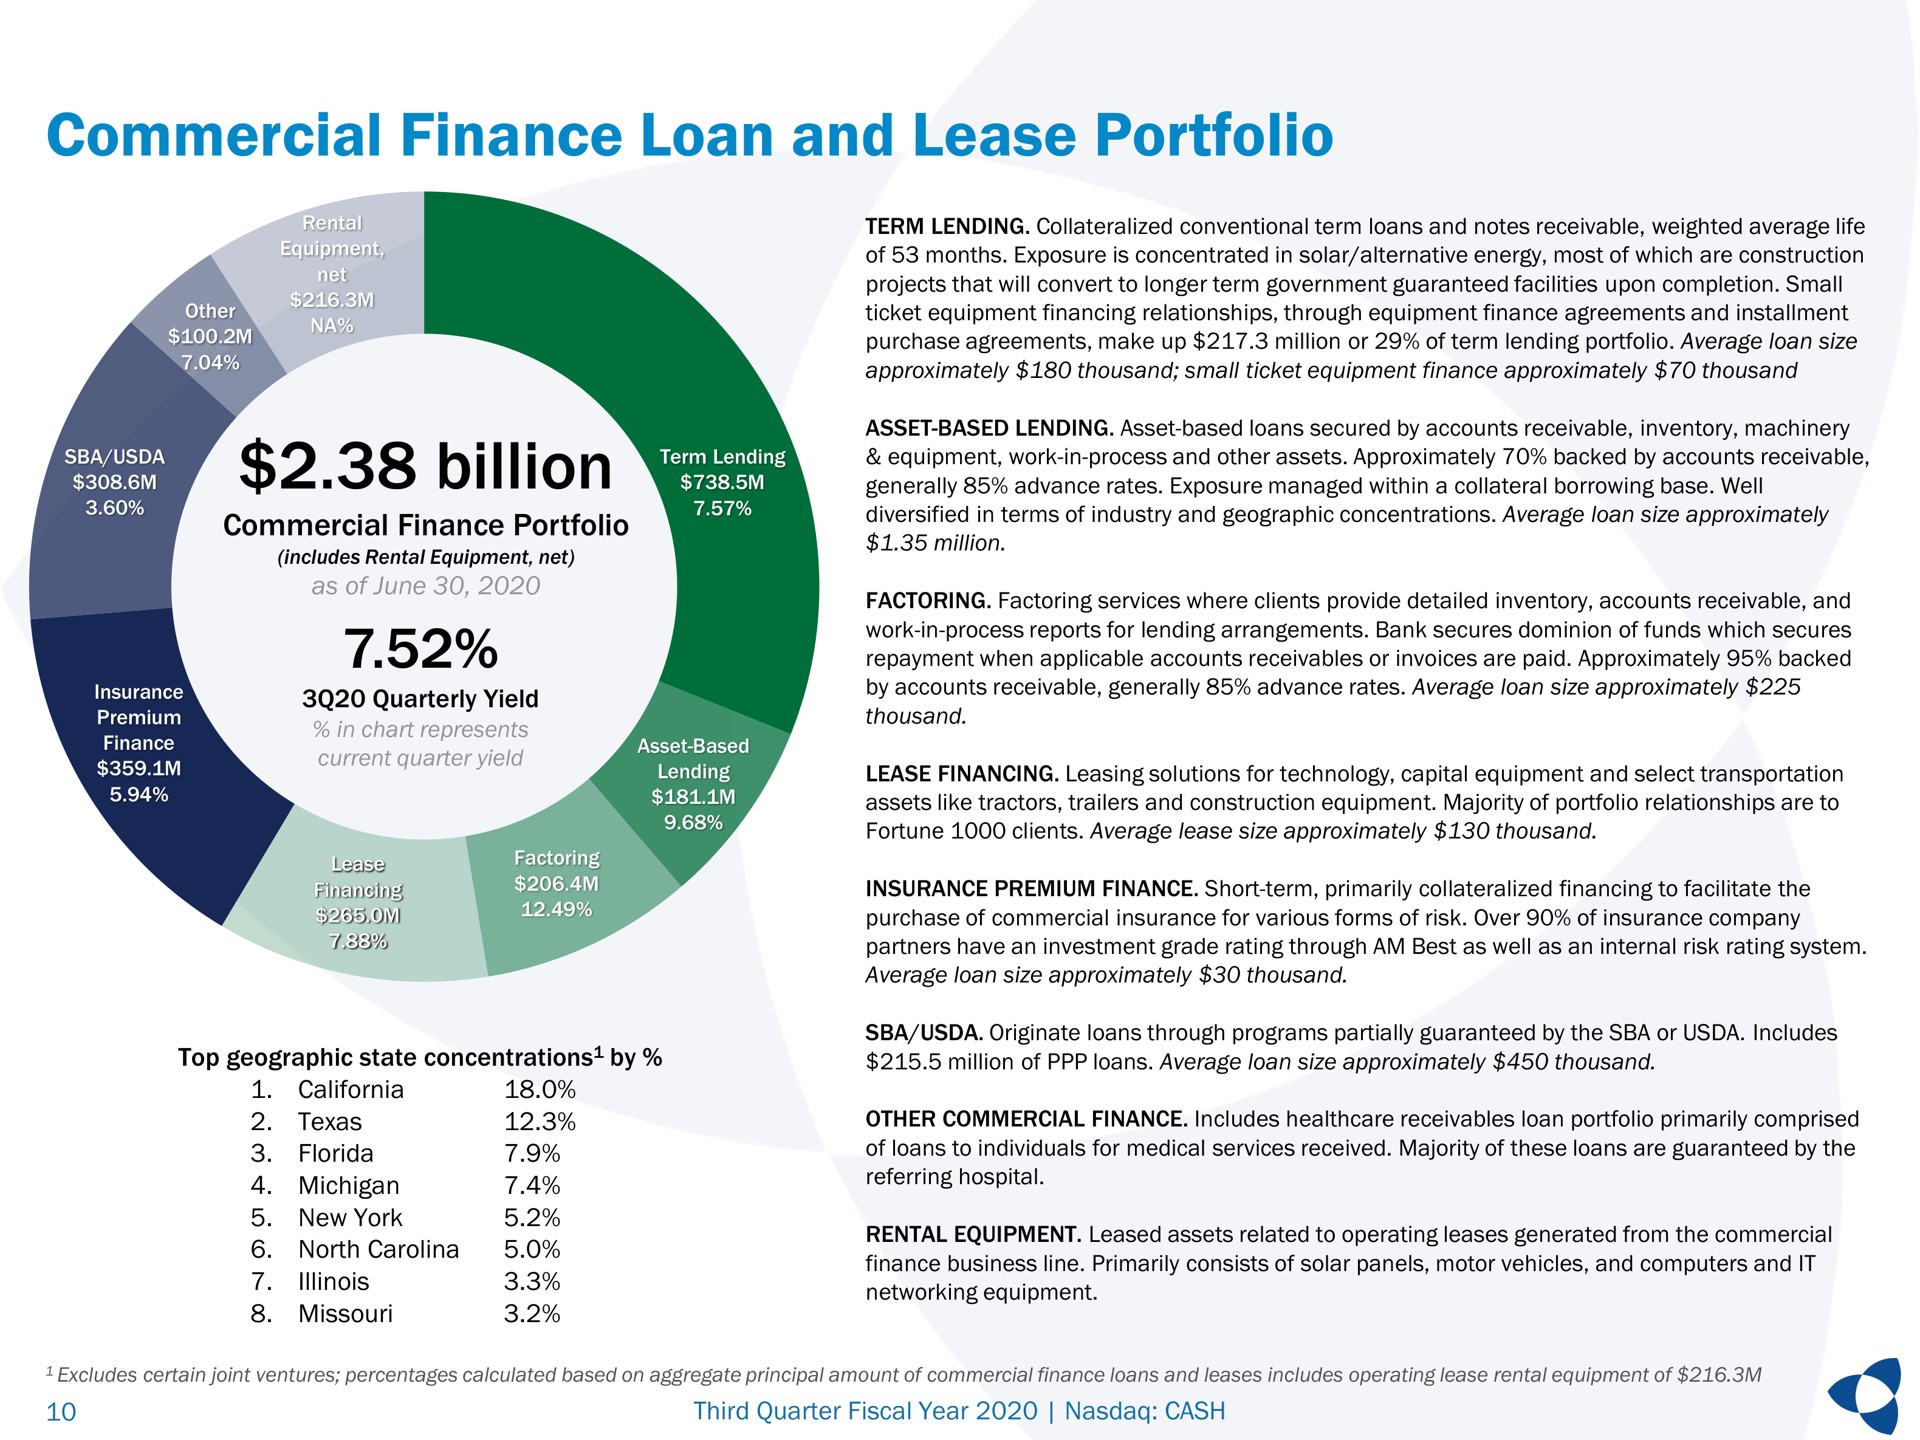 commercial finance loan and lease portfolio billion naw | Pathward Financial